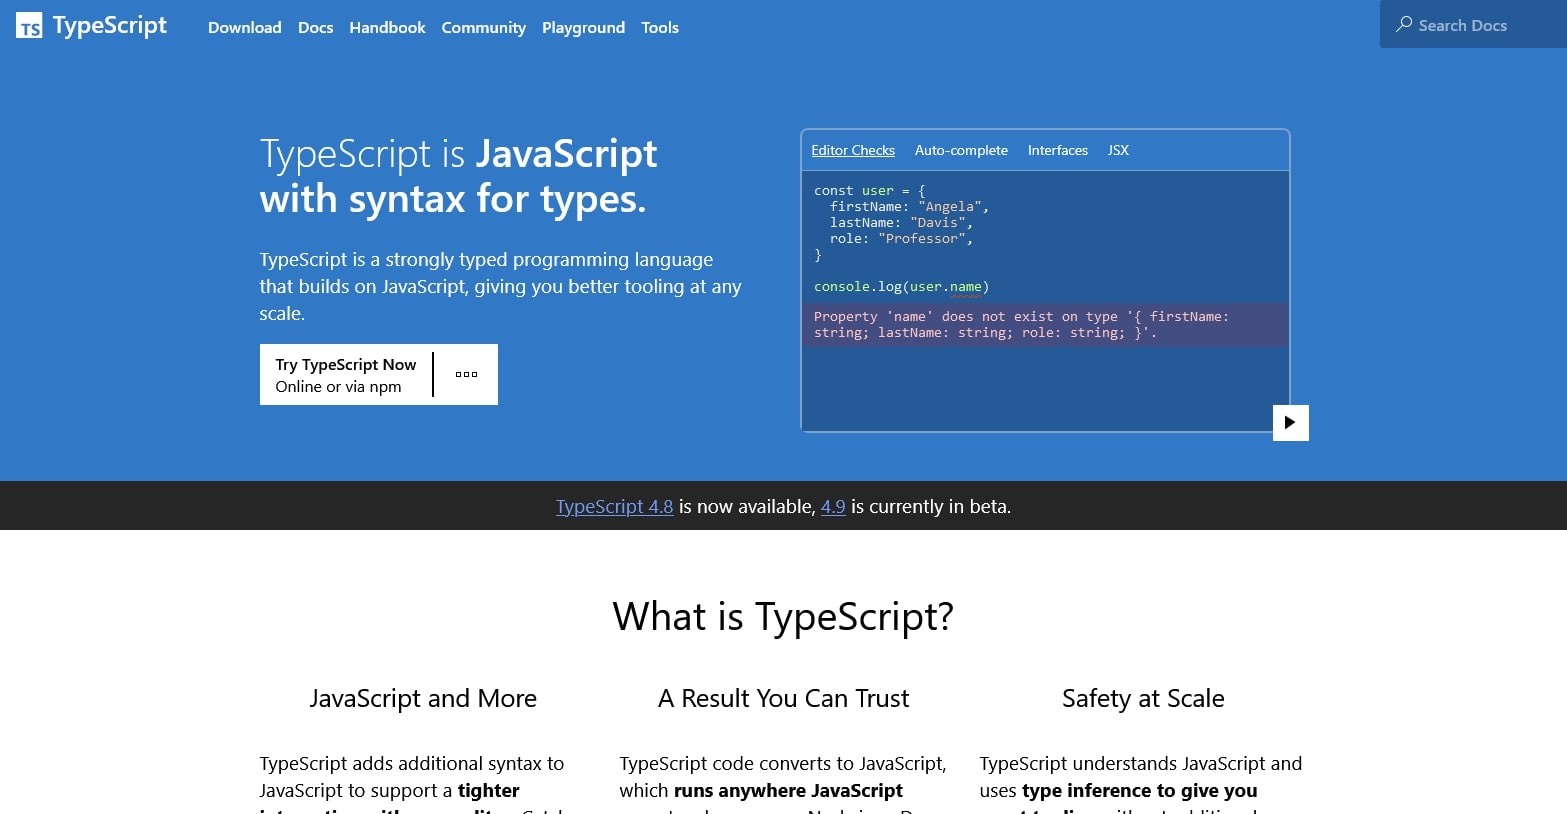 Screenshot of TypeScript's site